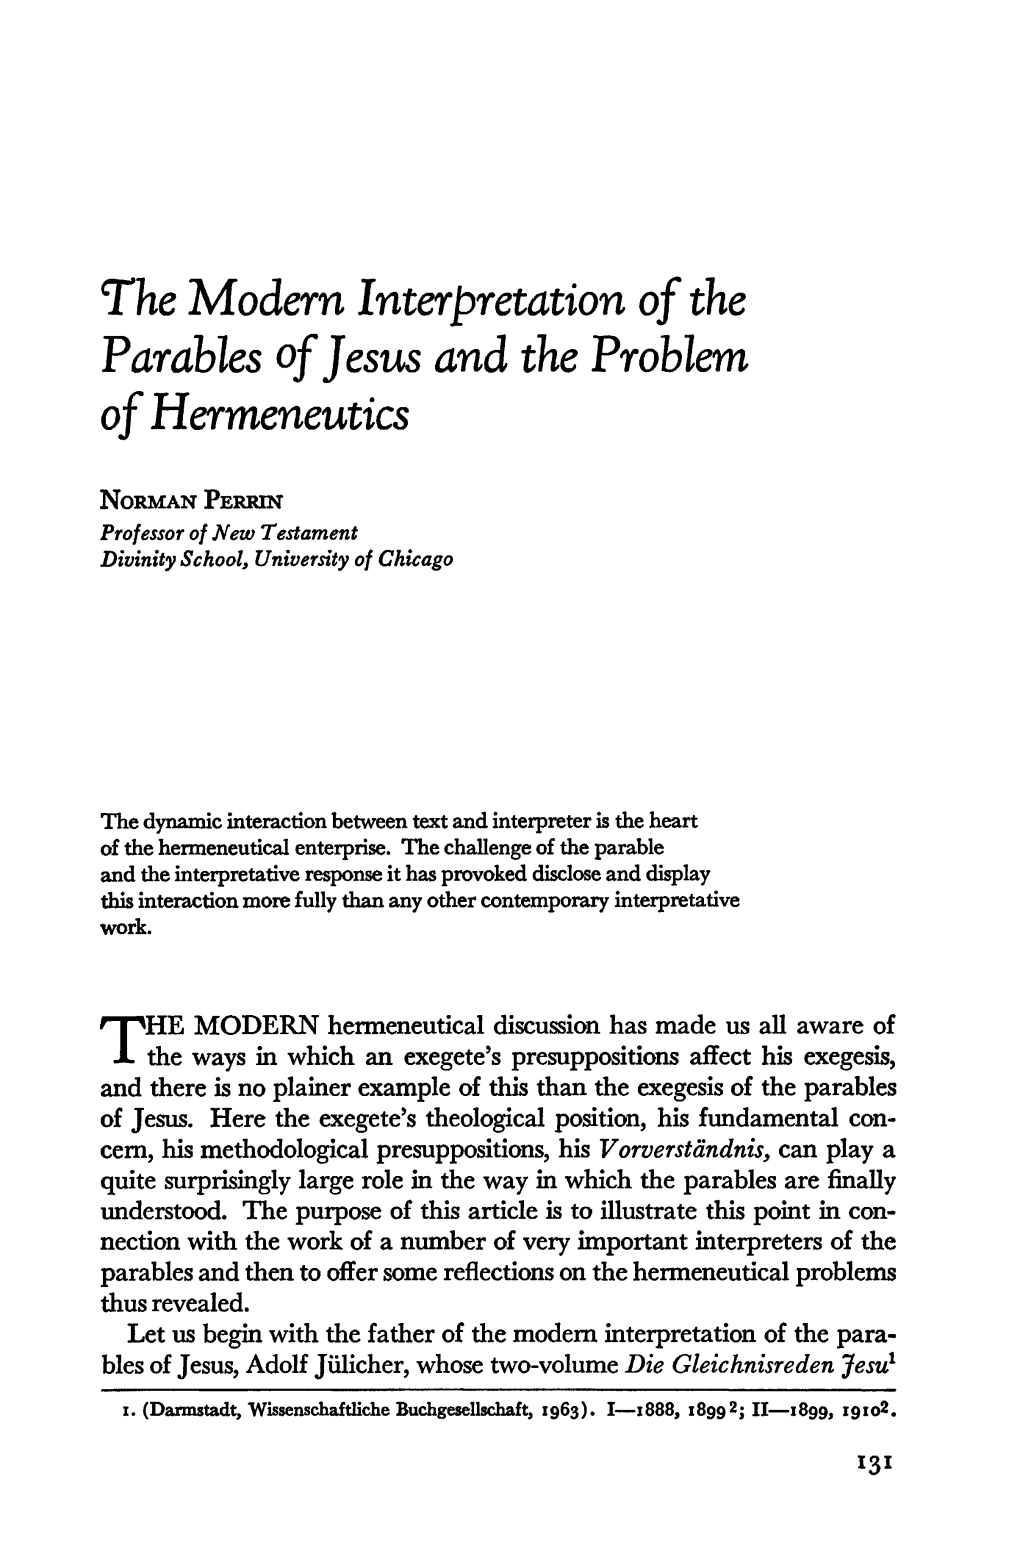 The Modem Interpretation of the Parables of Jesus and the Problem of Hermeneutics